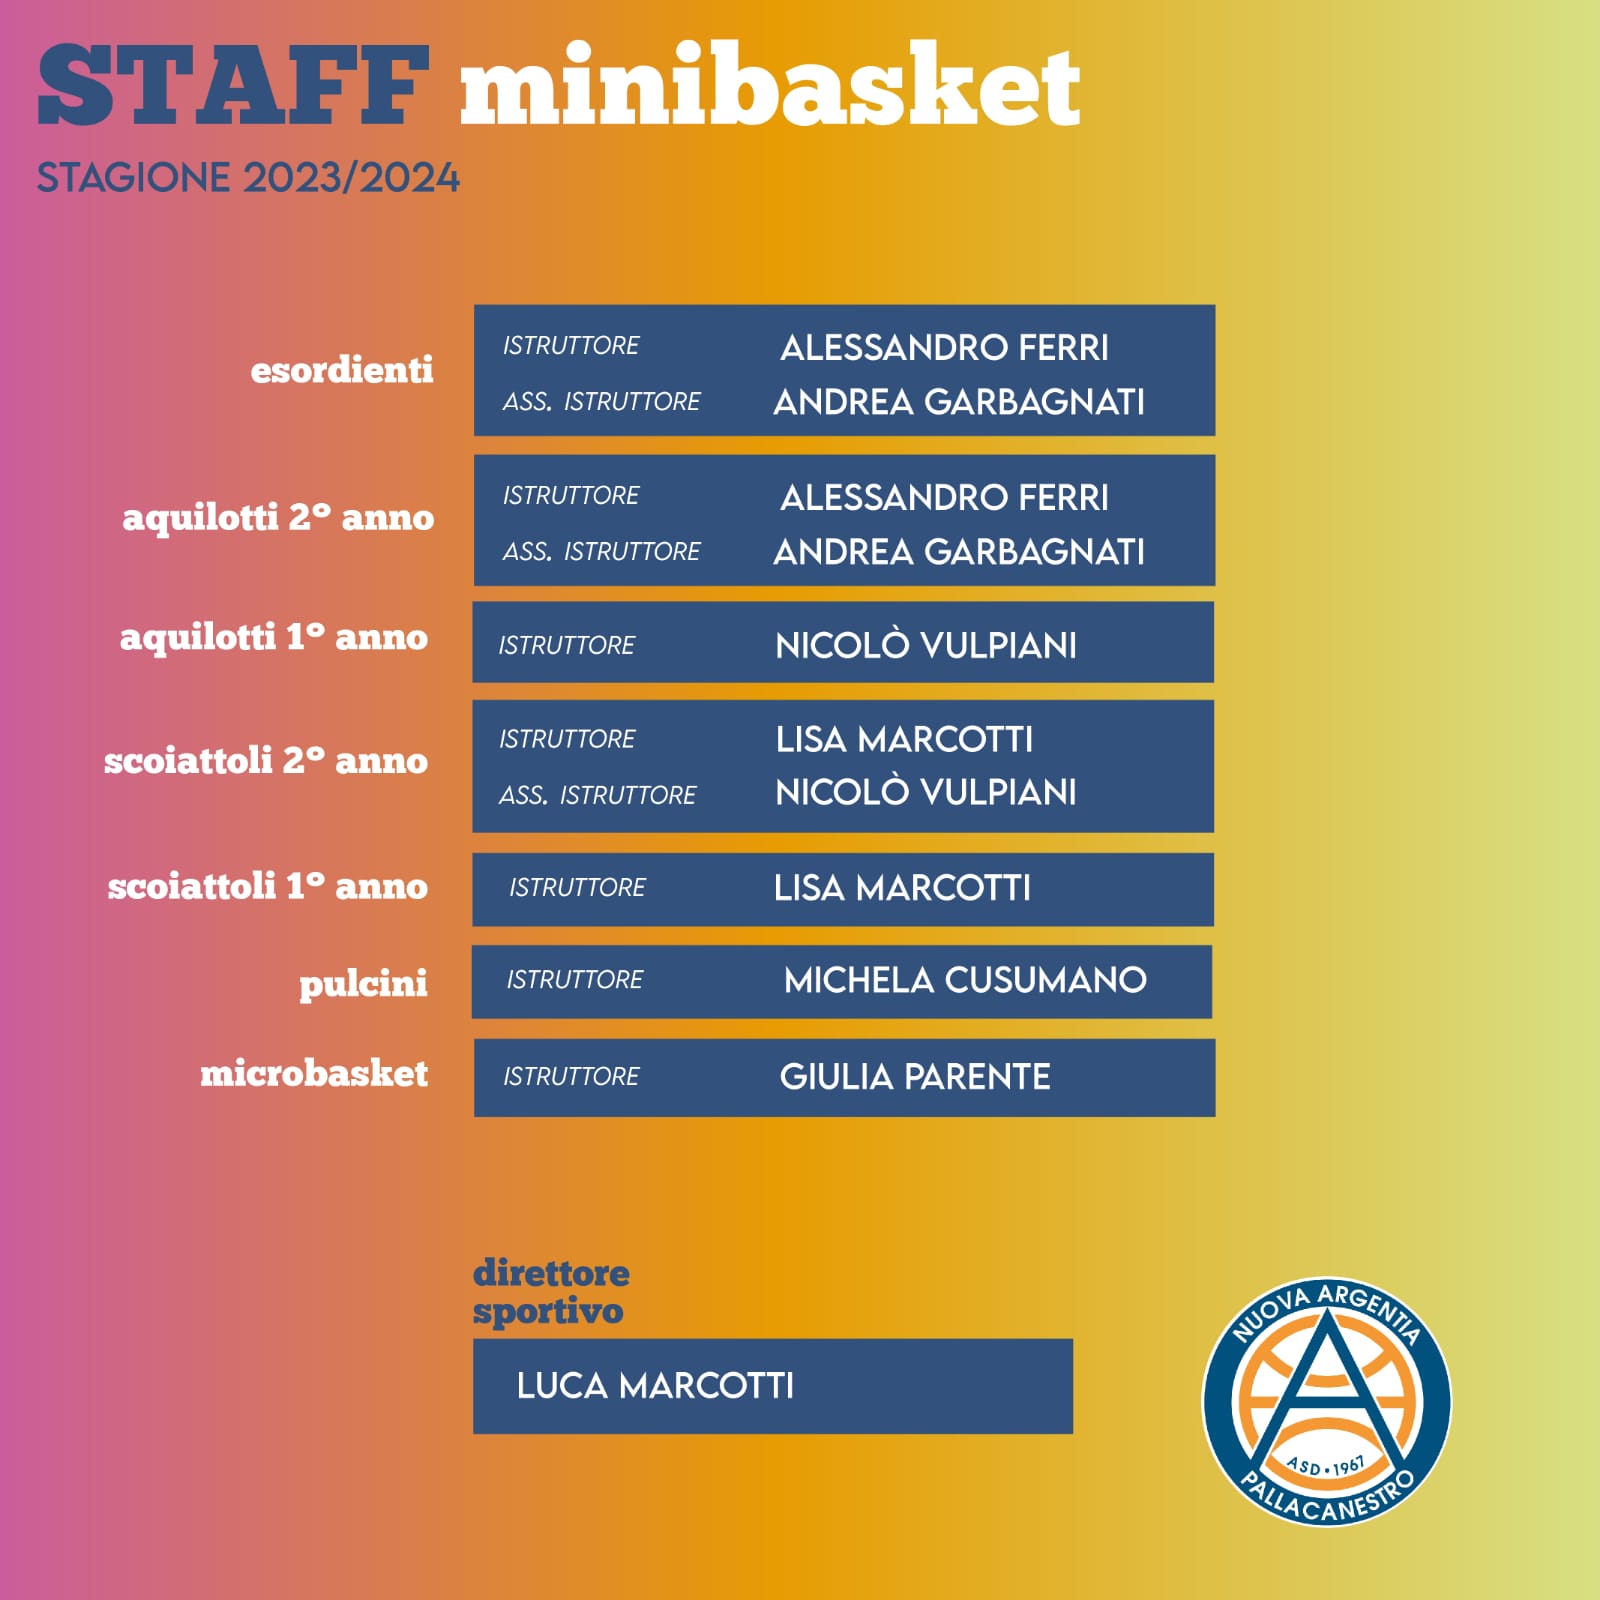 Staff Nuova Argentia Gorgonzola 2023/2024: Staff Minibasket